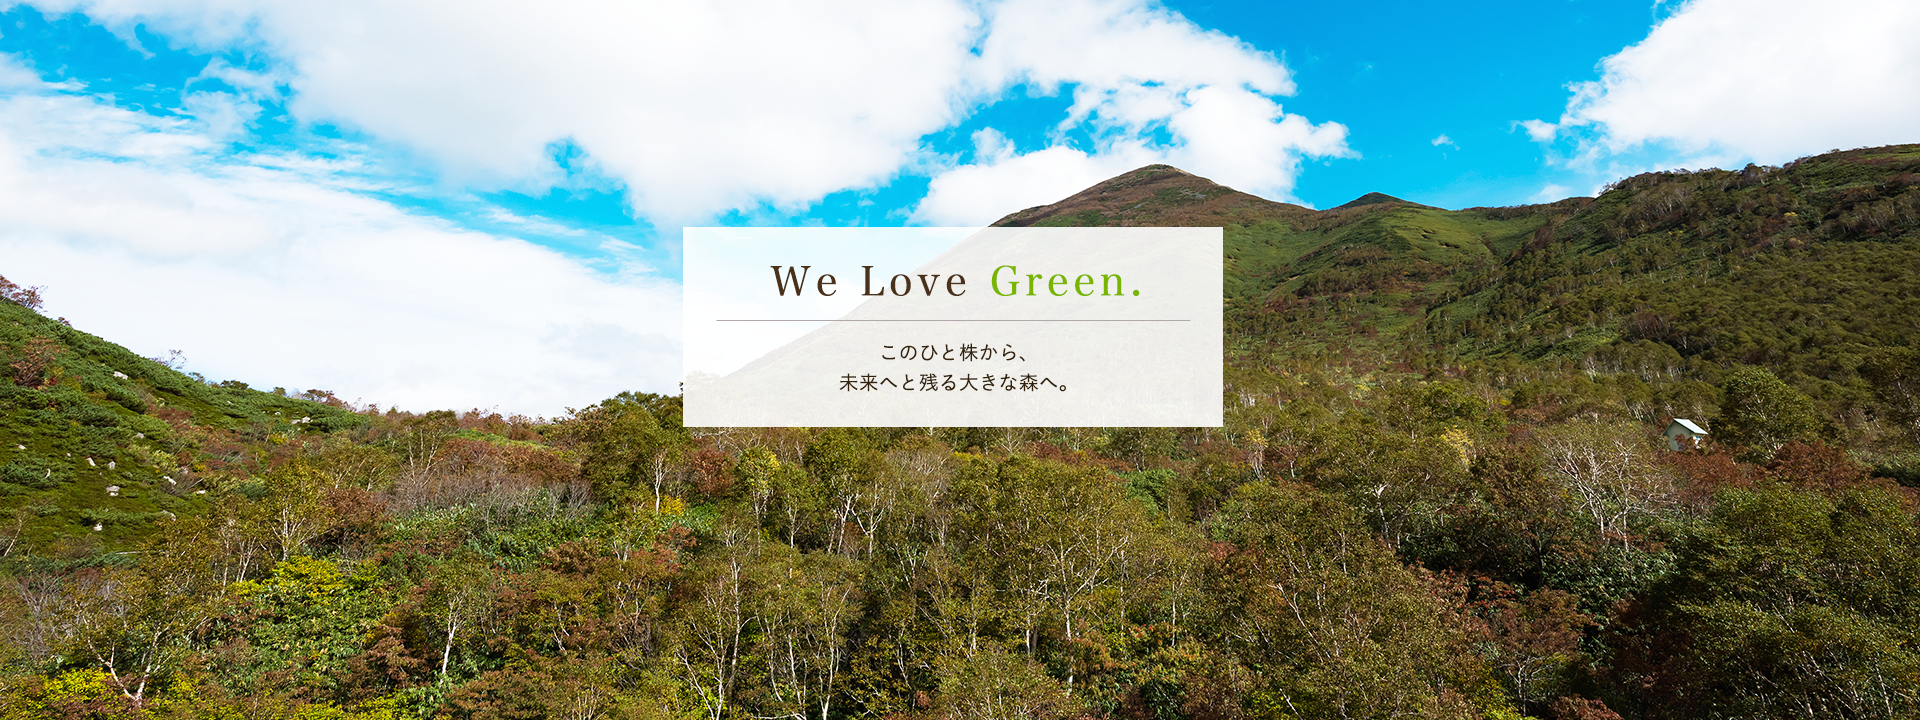 We Love Green.